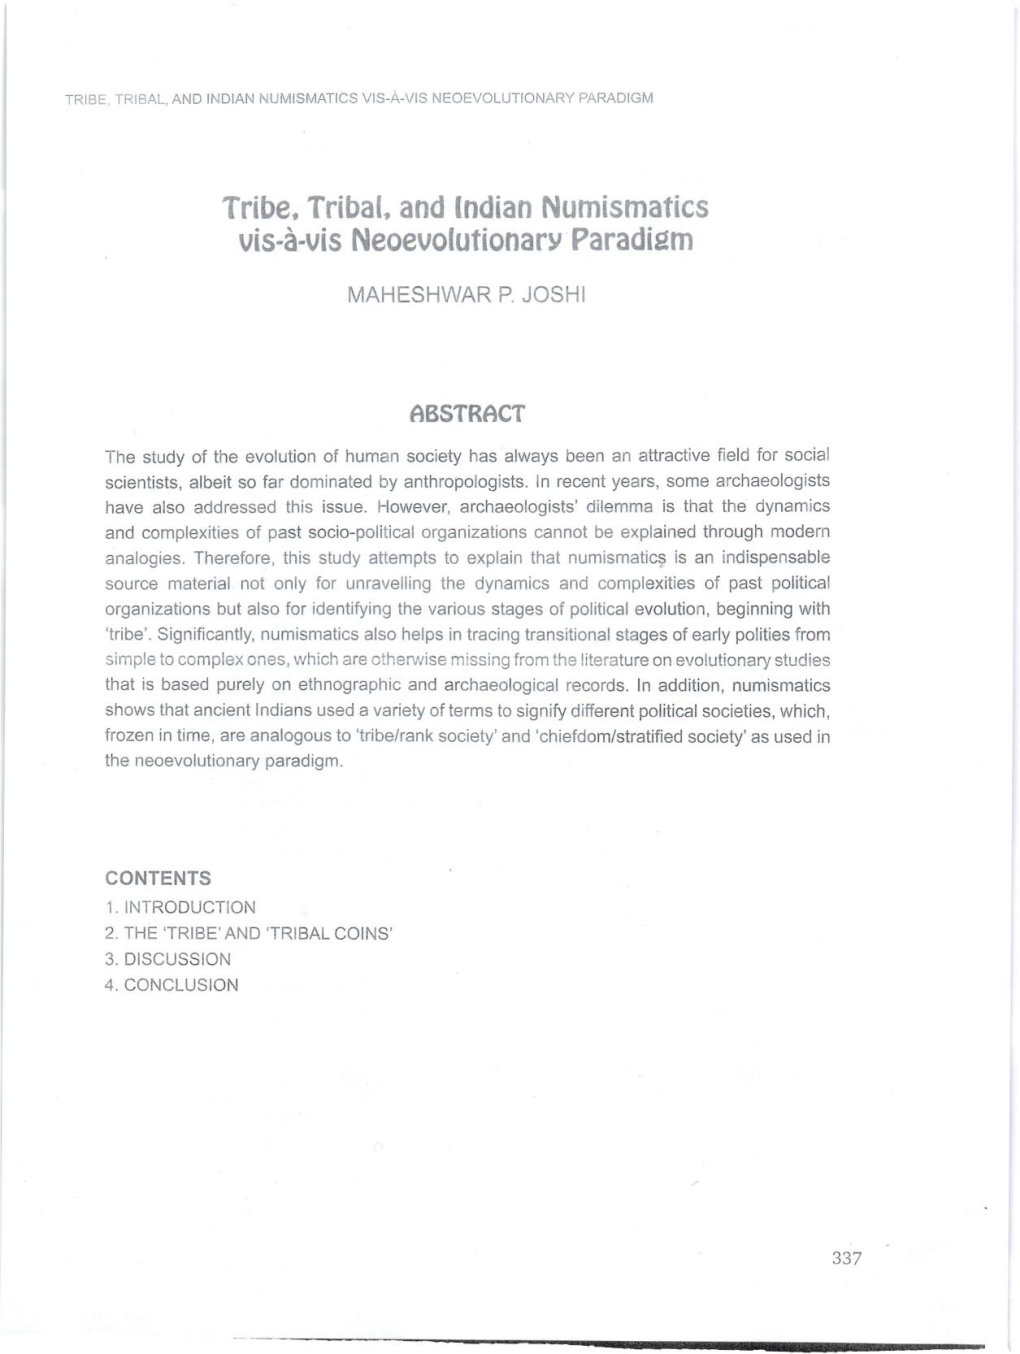 13. Tribe, Tribal and Indian Numismatics Vis-A-Vis Neoevolutionary Paradigm